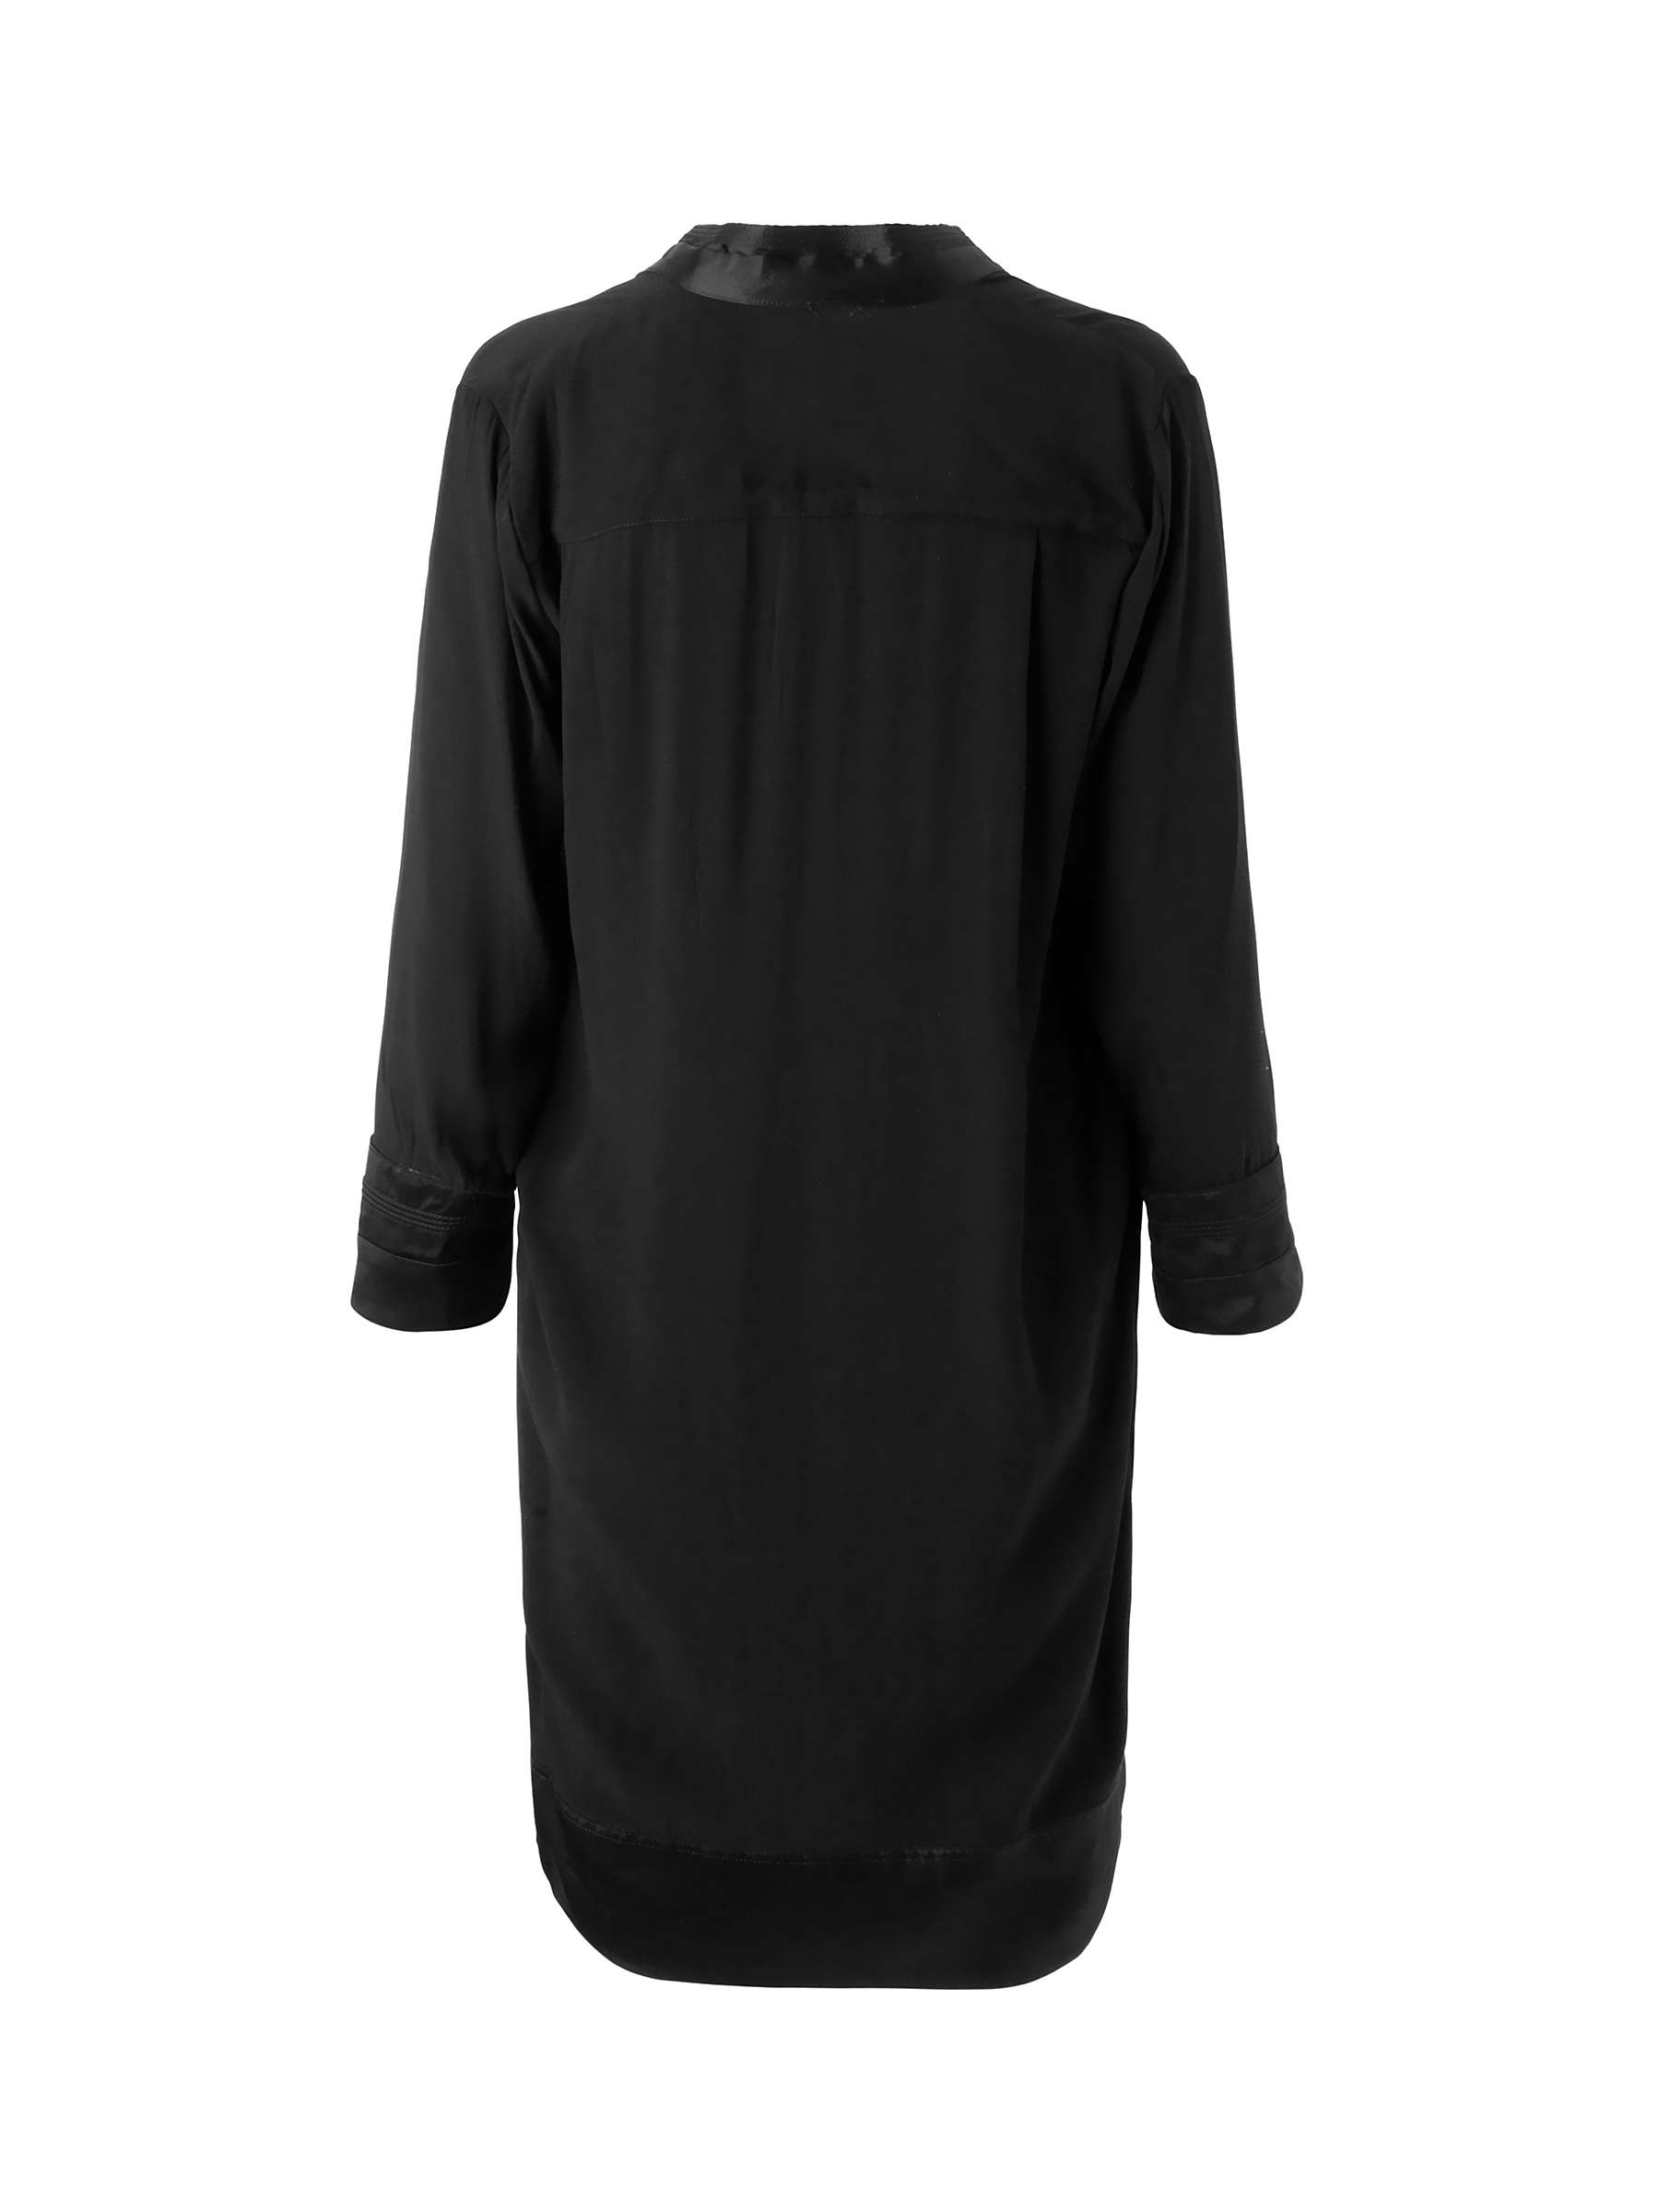 Noa Noa Noos Dressy Crepe Dress, Black at John Lewis & Partners